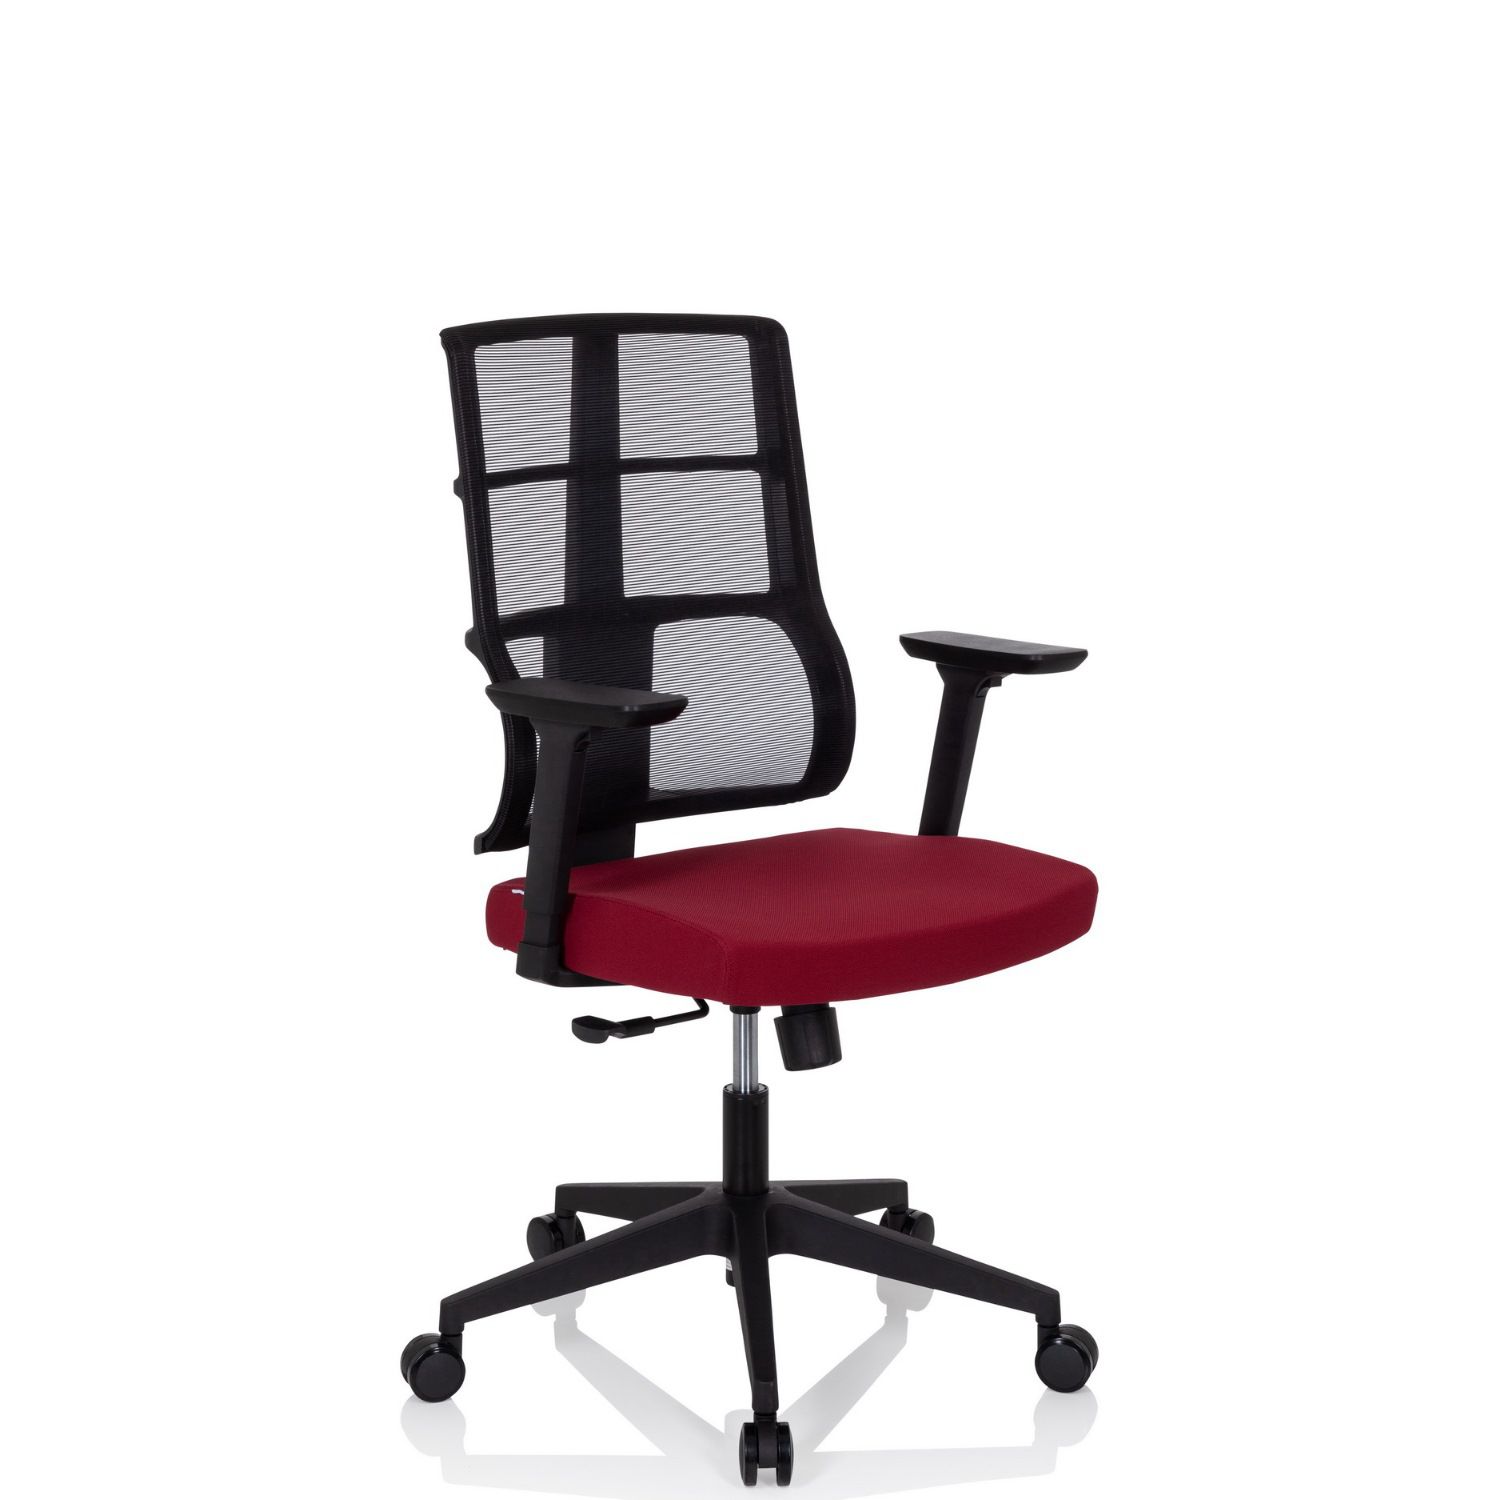 Bürostuhl / Drehstuhl SPINIO Netzstoff / Stoff schwarz / rubinrot hjh OFFICE